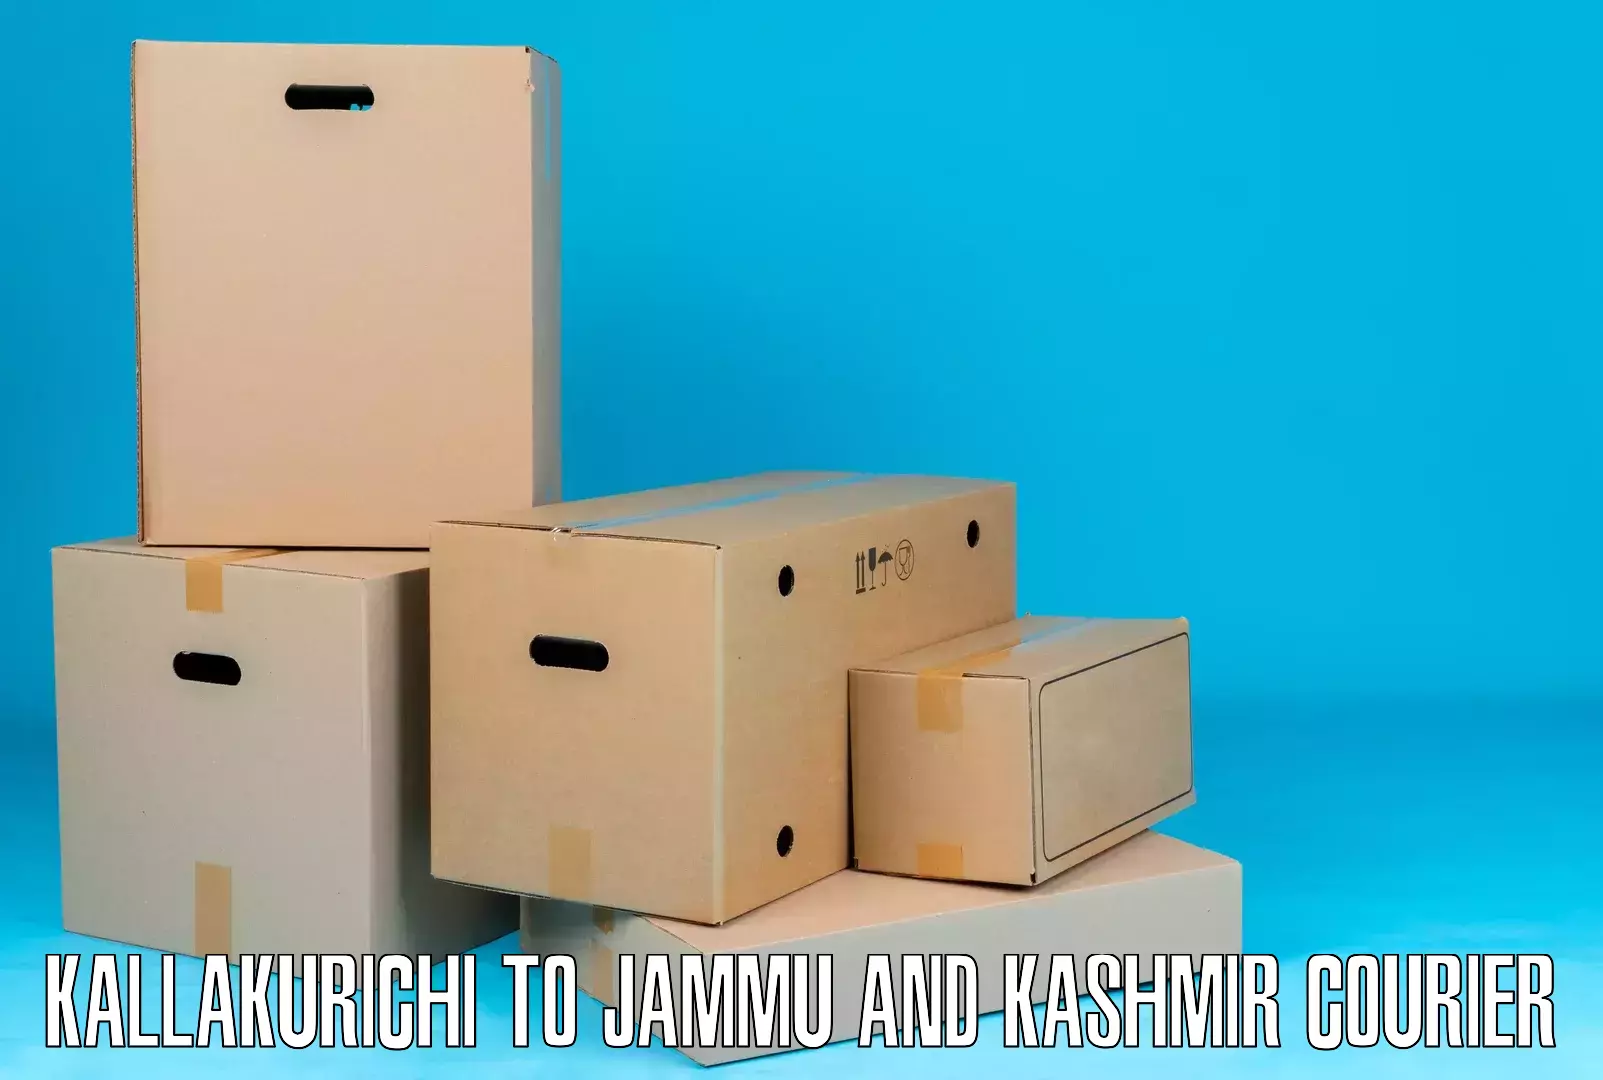 24-hour courier service Kallakurichi to University of Kashmir Srinagar